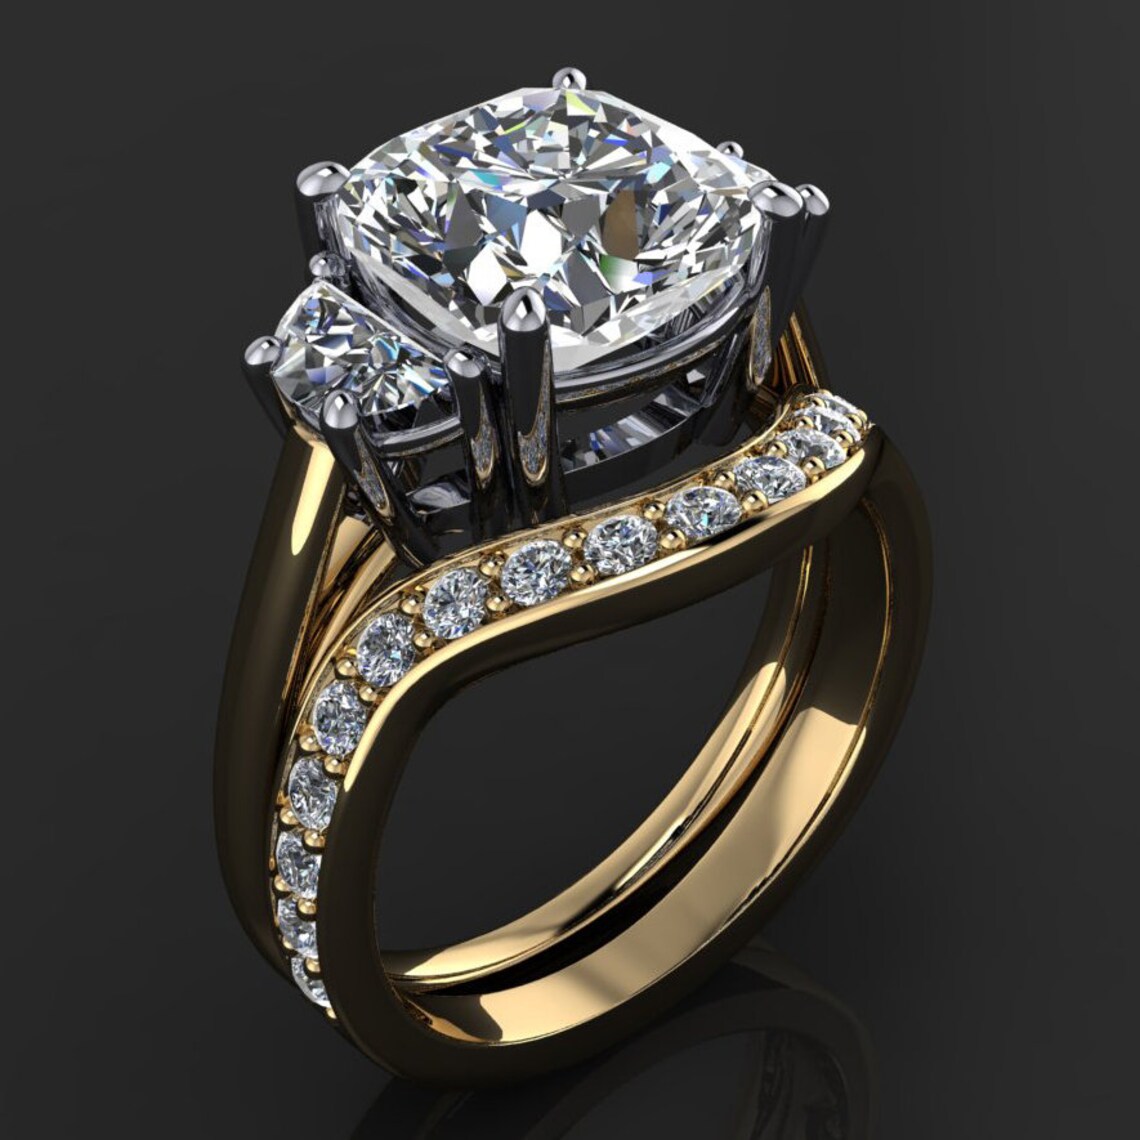 ava ring - 3 carat cushion NEO moissanite engagement ring, half moon side stones - J Hollywood Designs